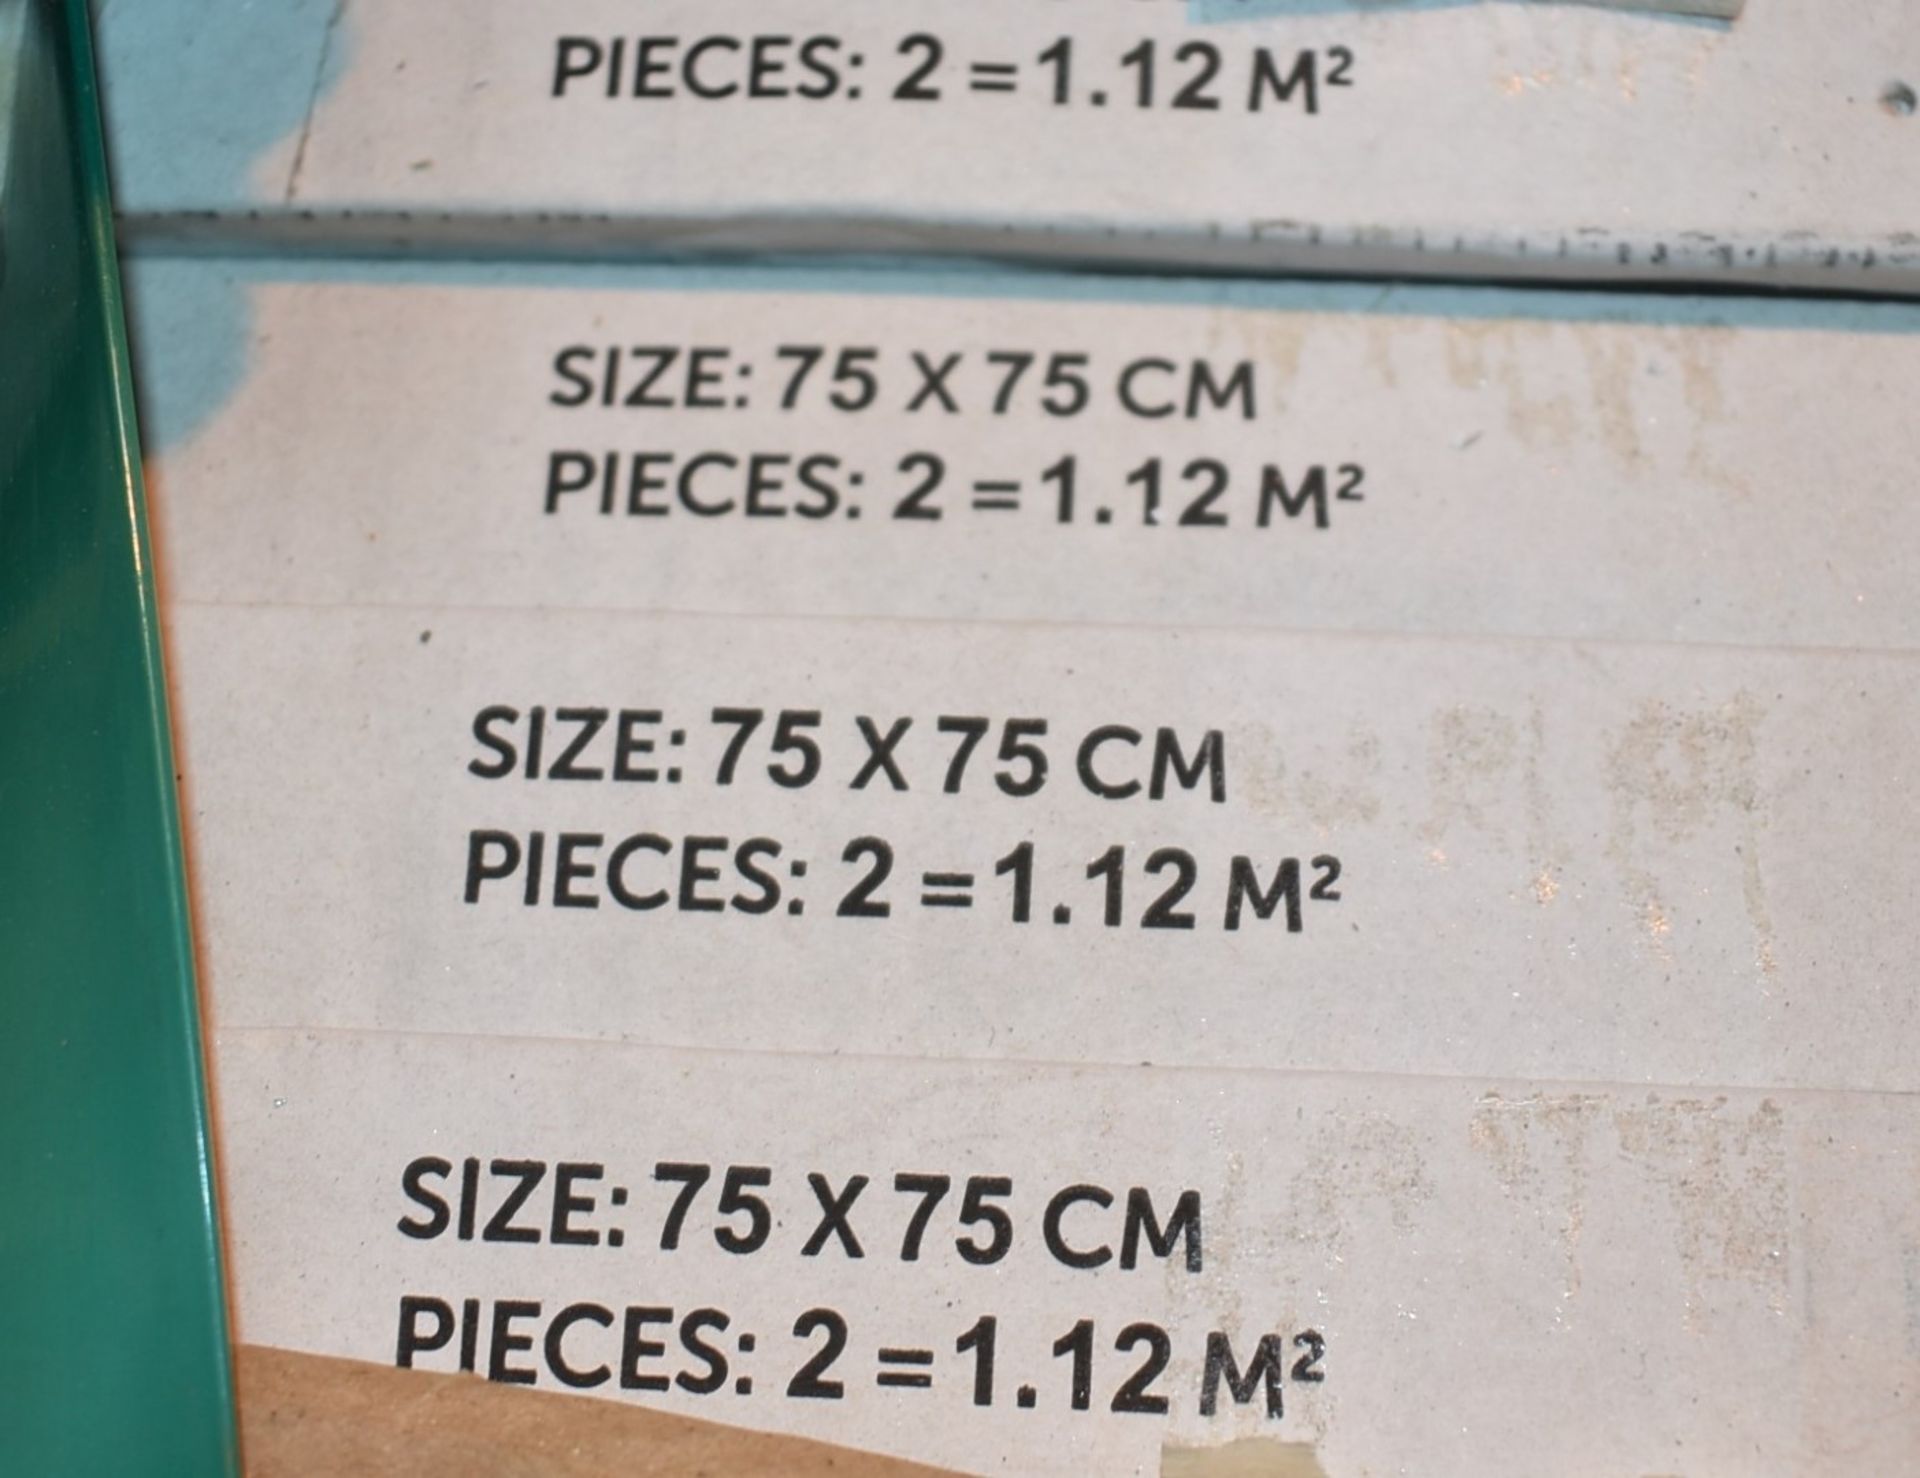 8 x Boxes of RAK Porcelain Tiles - Borgogna Stone Range - Grey Colour Gloss Finish - Size: 75x75cm - Image 4 of 6